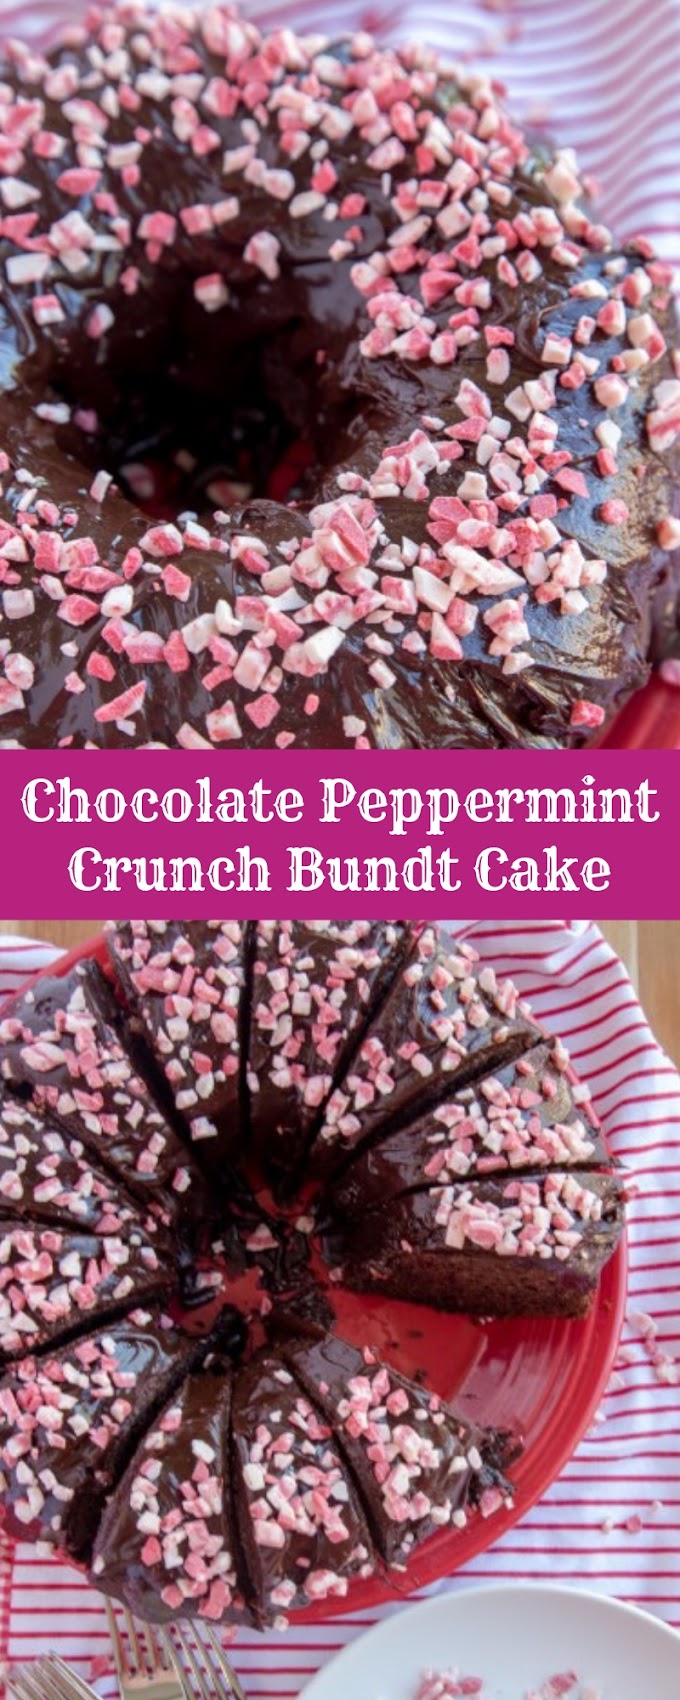 Chocolate Peppermint Crunch Bundt Cake  #Christmas  #Cake  #Peppermint